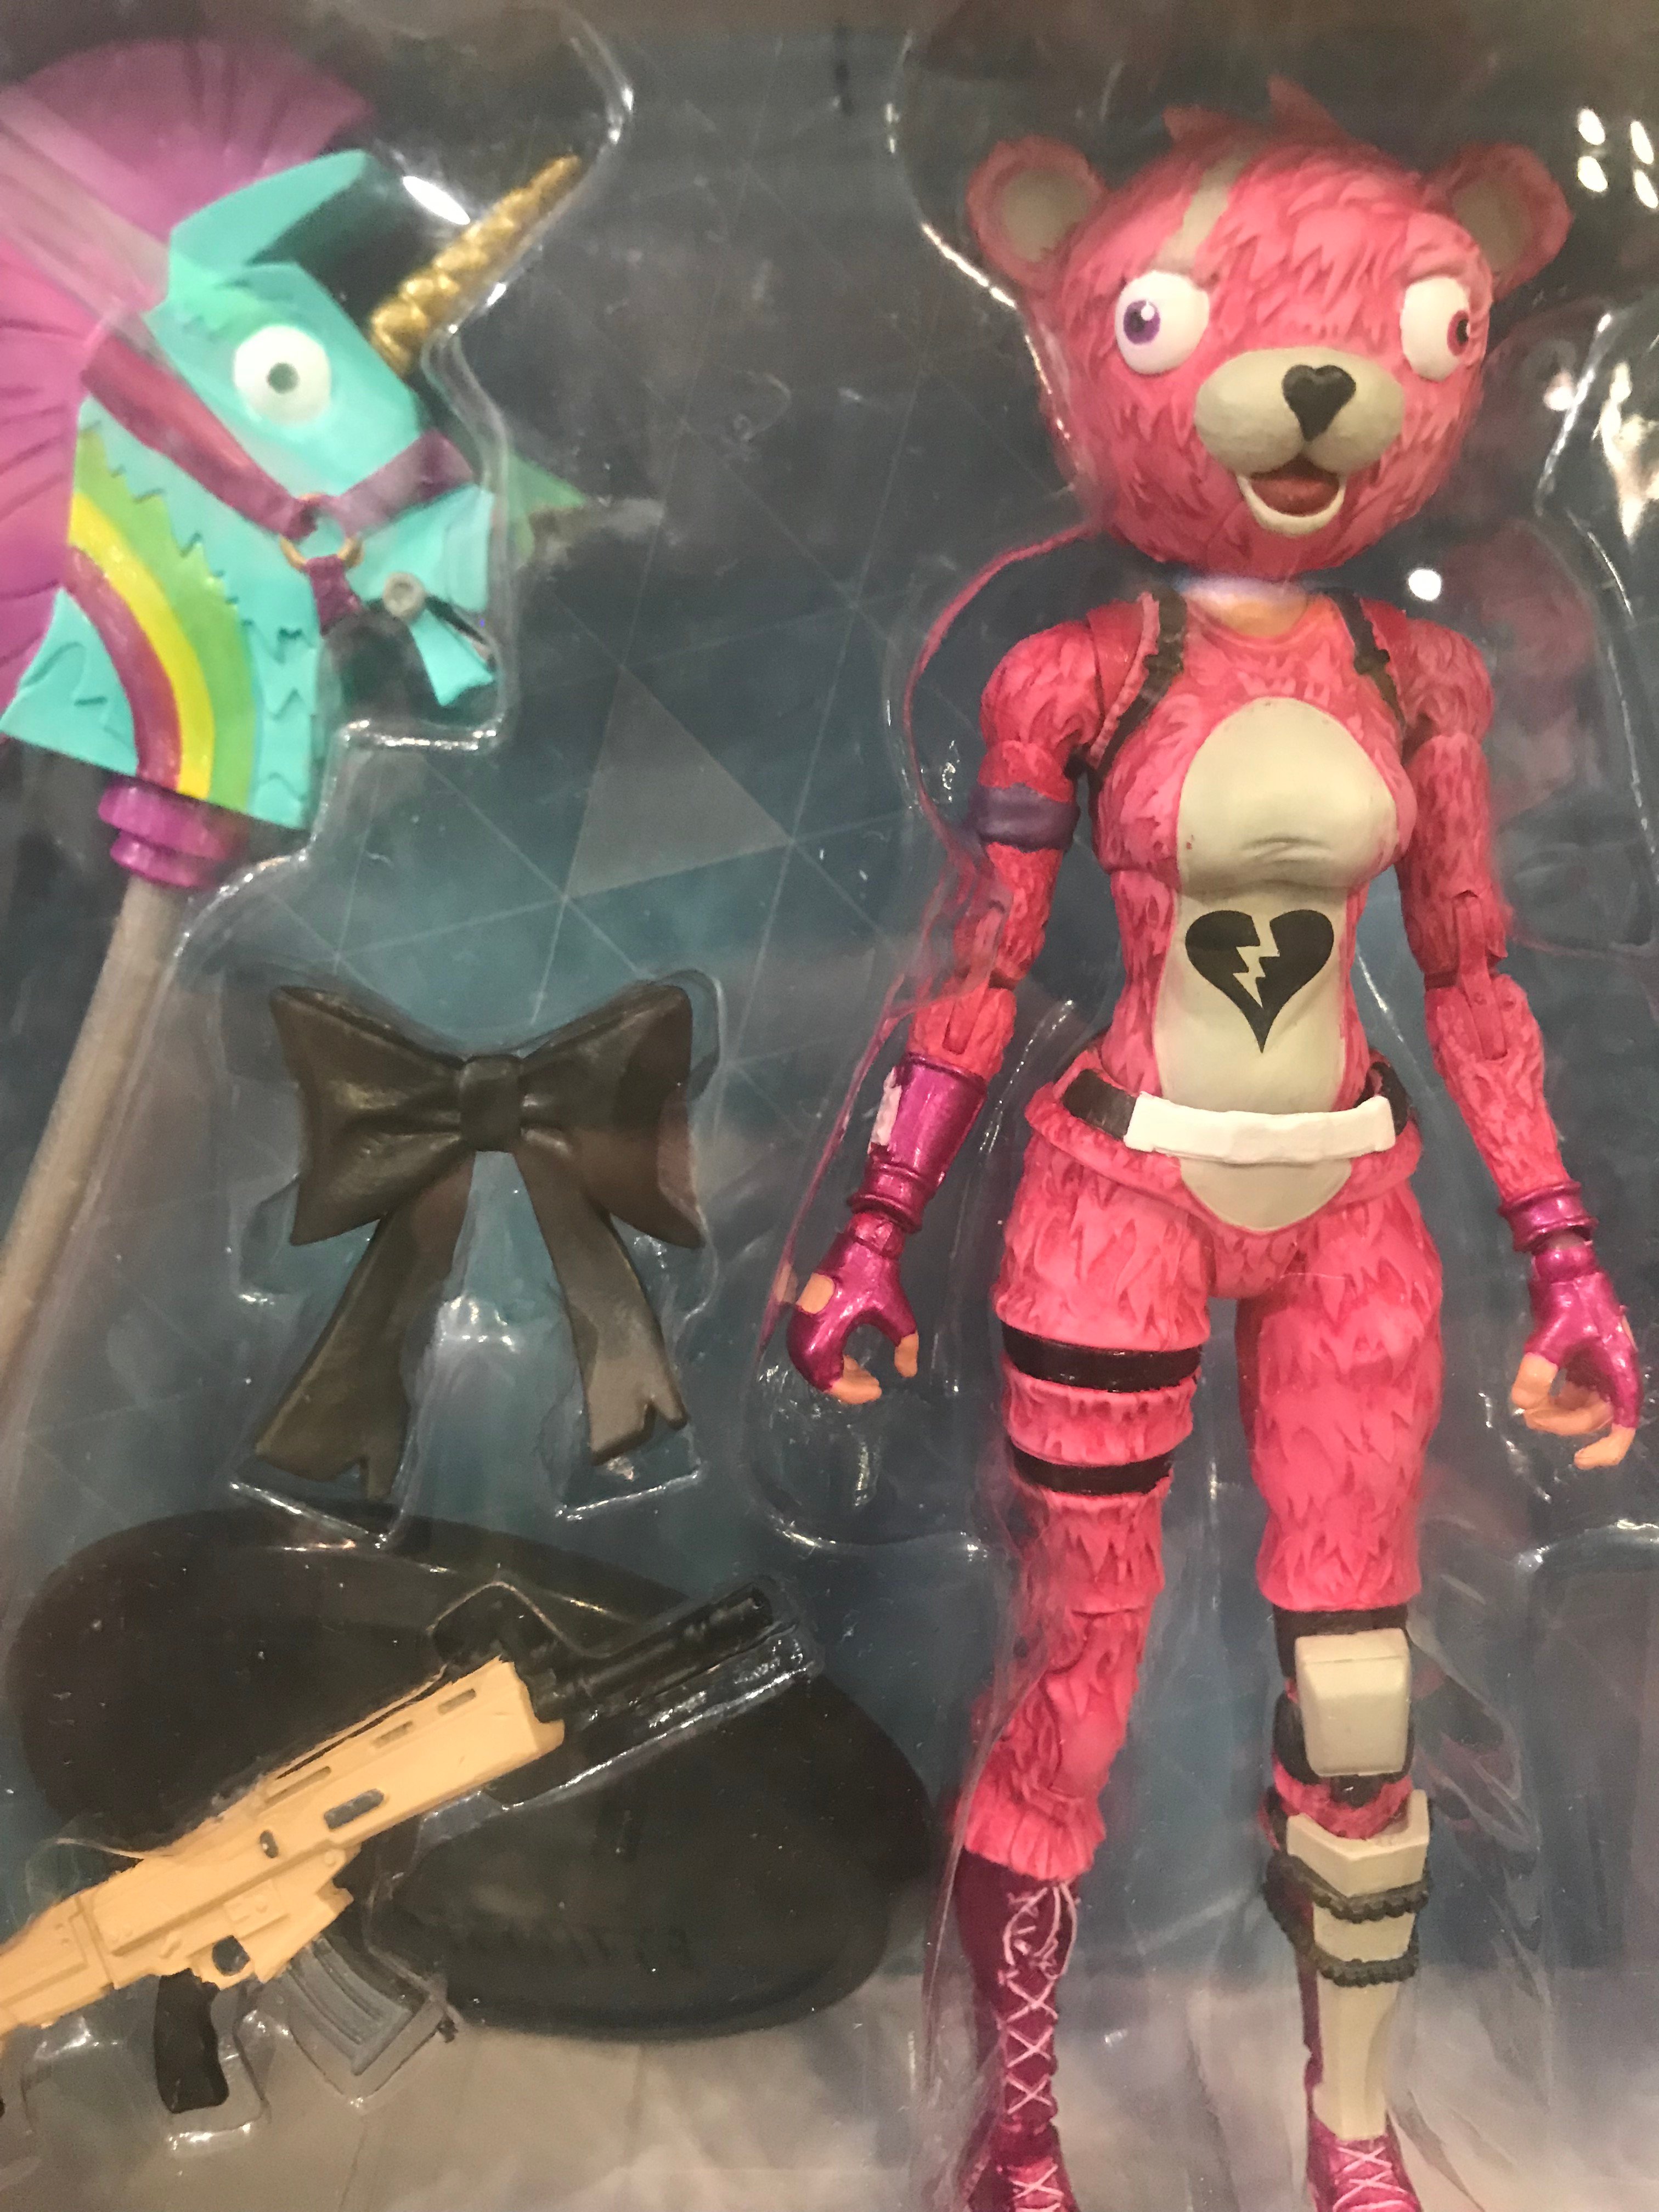 McFarlane Toys Reveals Fortnite Action Figure - 219559 1262491 1006